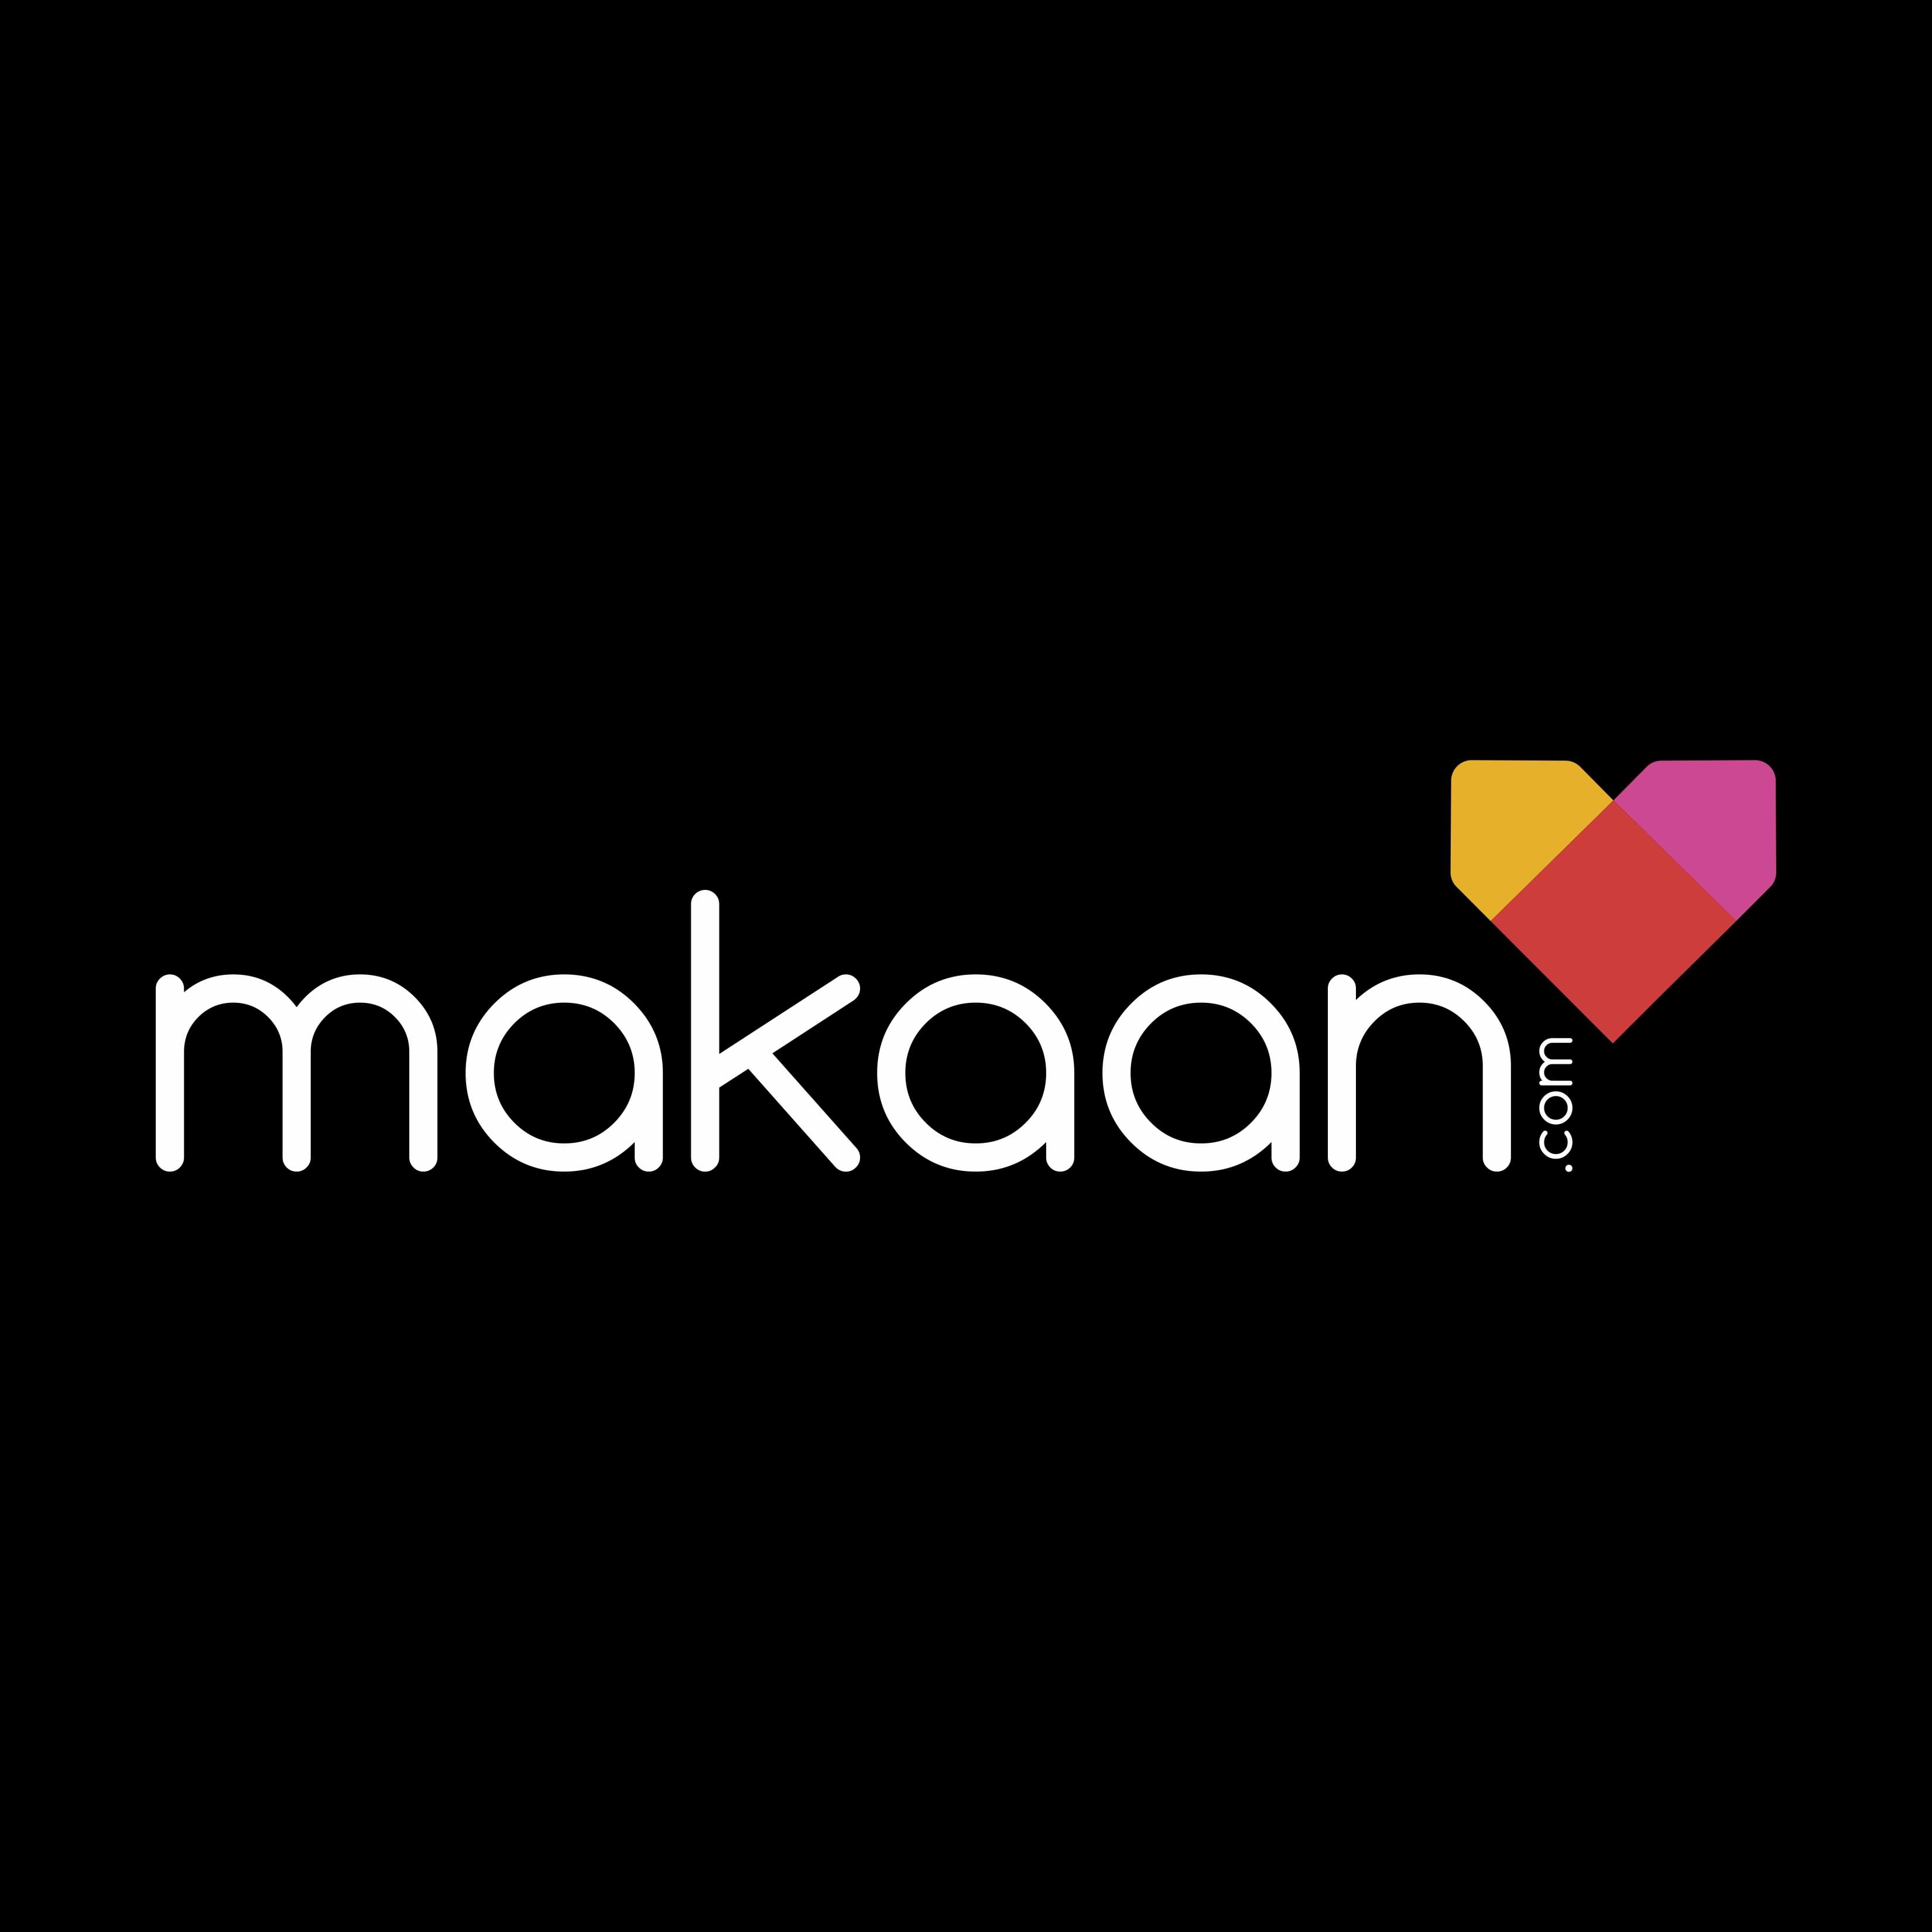 Makaan.com